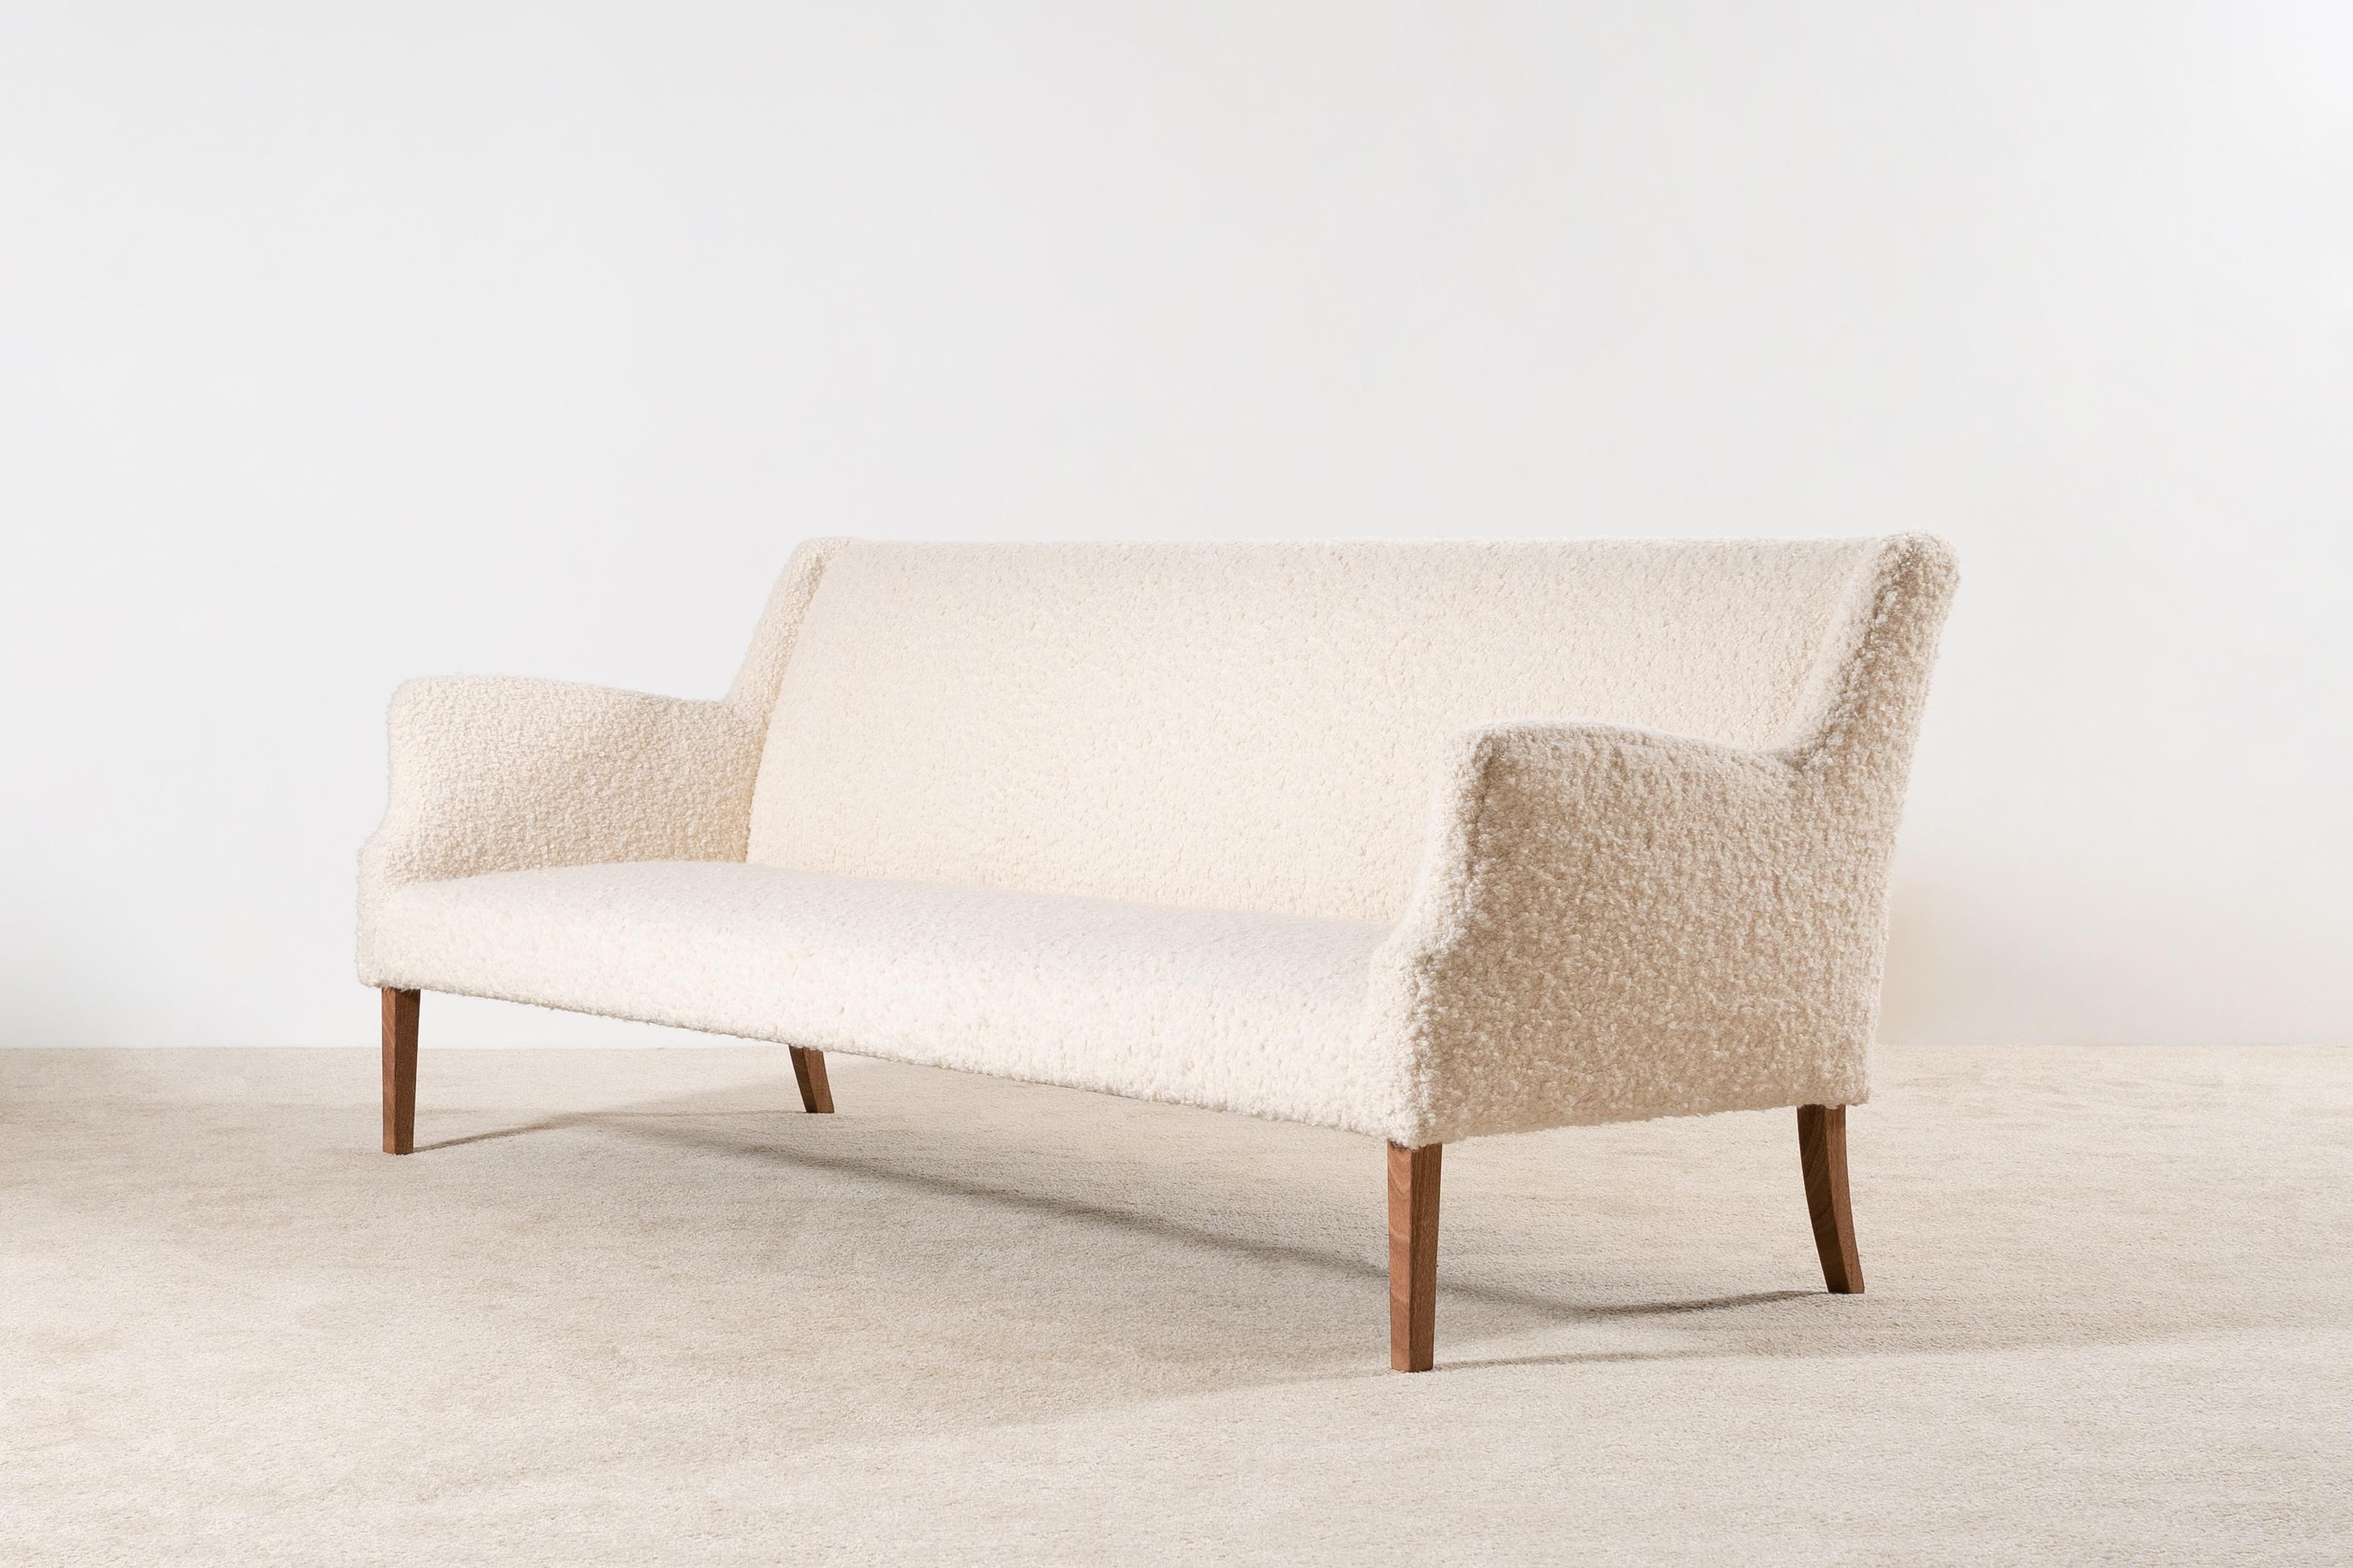 Scandinavian Modern Three-Seat Danish Sofa from the 1960s Newly Upholstered